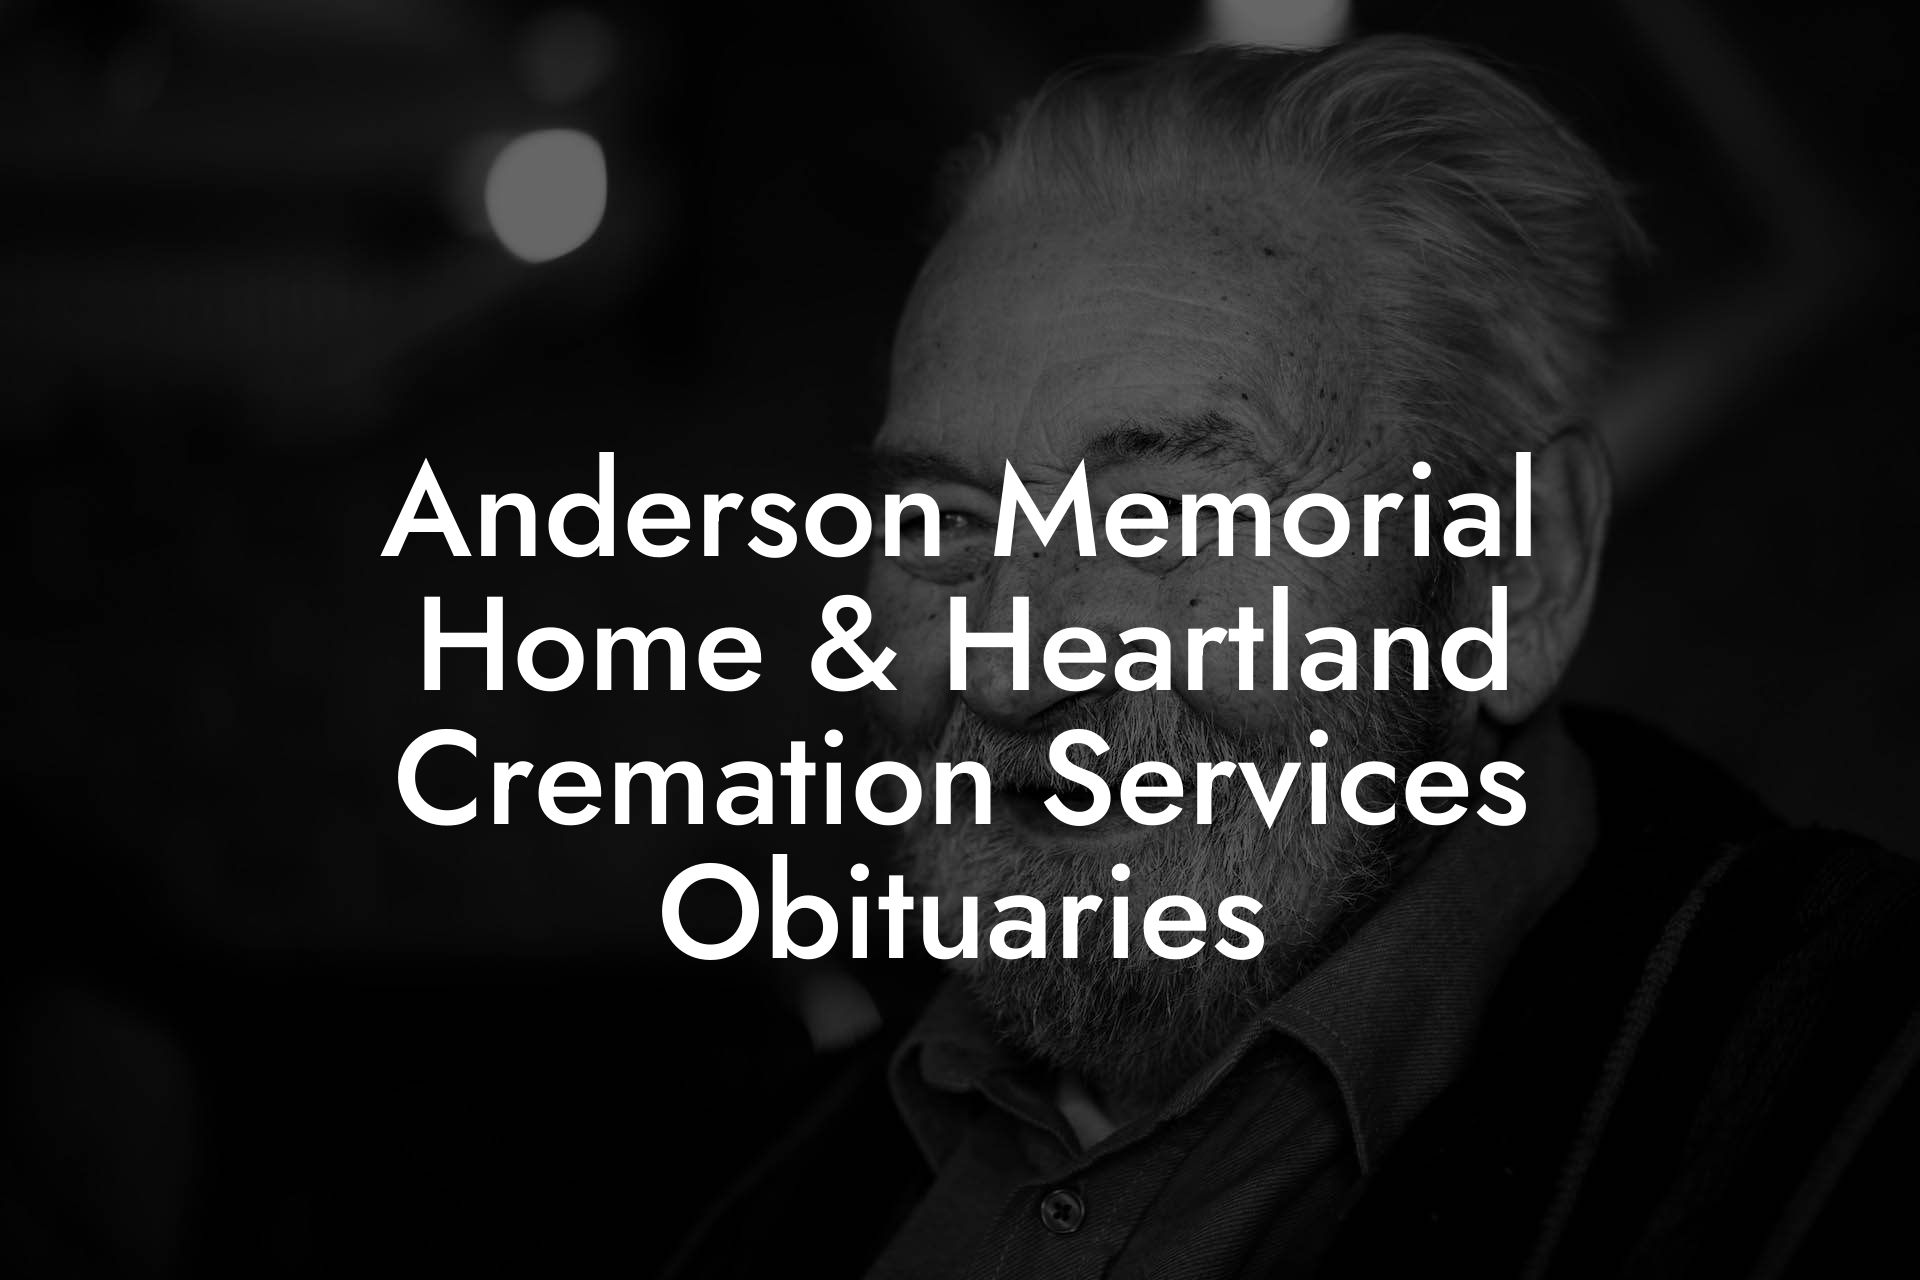 Anderson Memorial Home & Heartland Cremation Services Obituaries